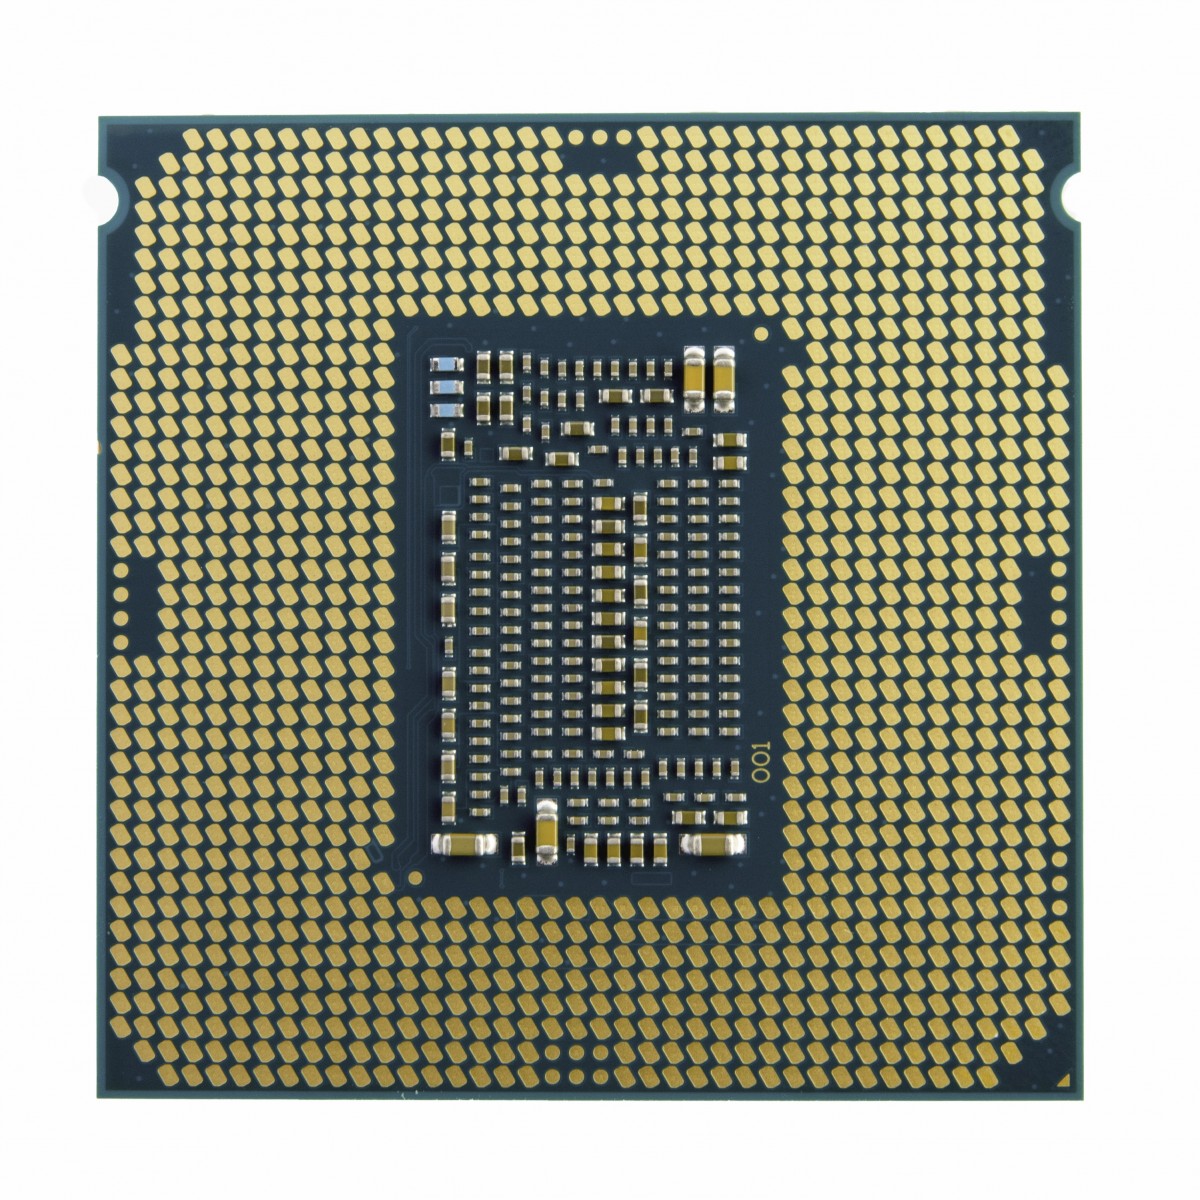 CPU Intel XEON Gold 6226R/16x2.9GHz/22MB/150W